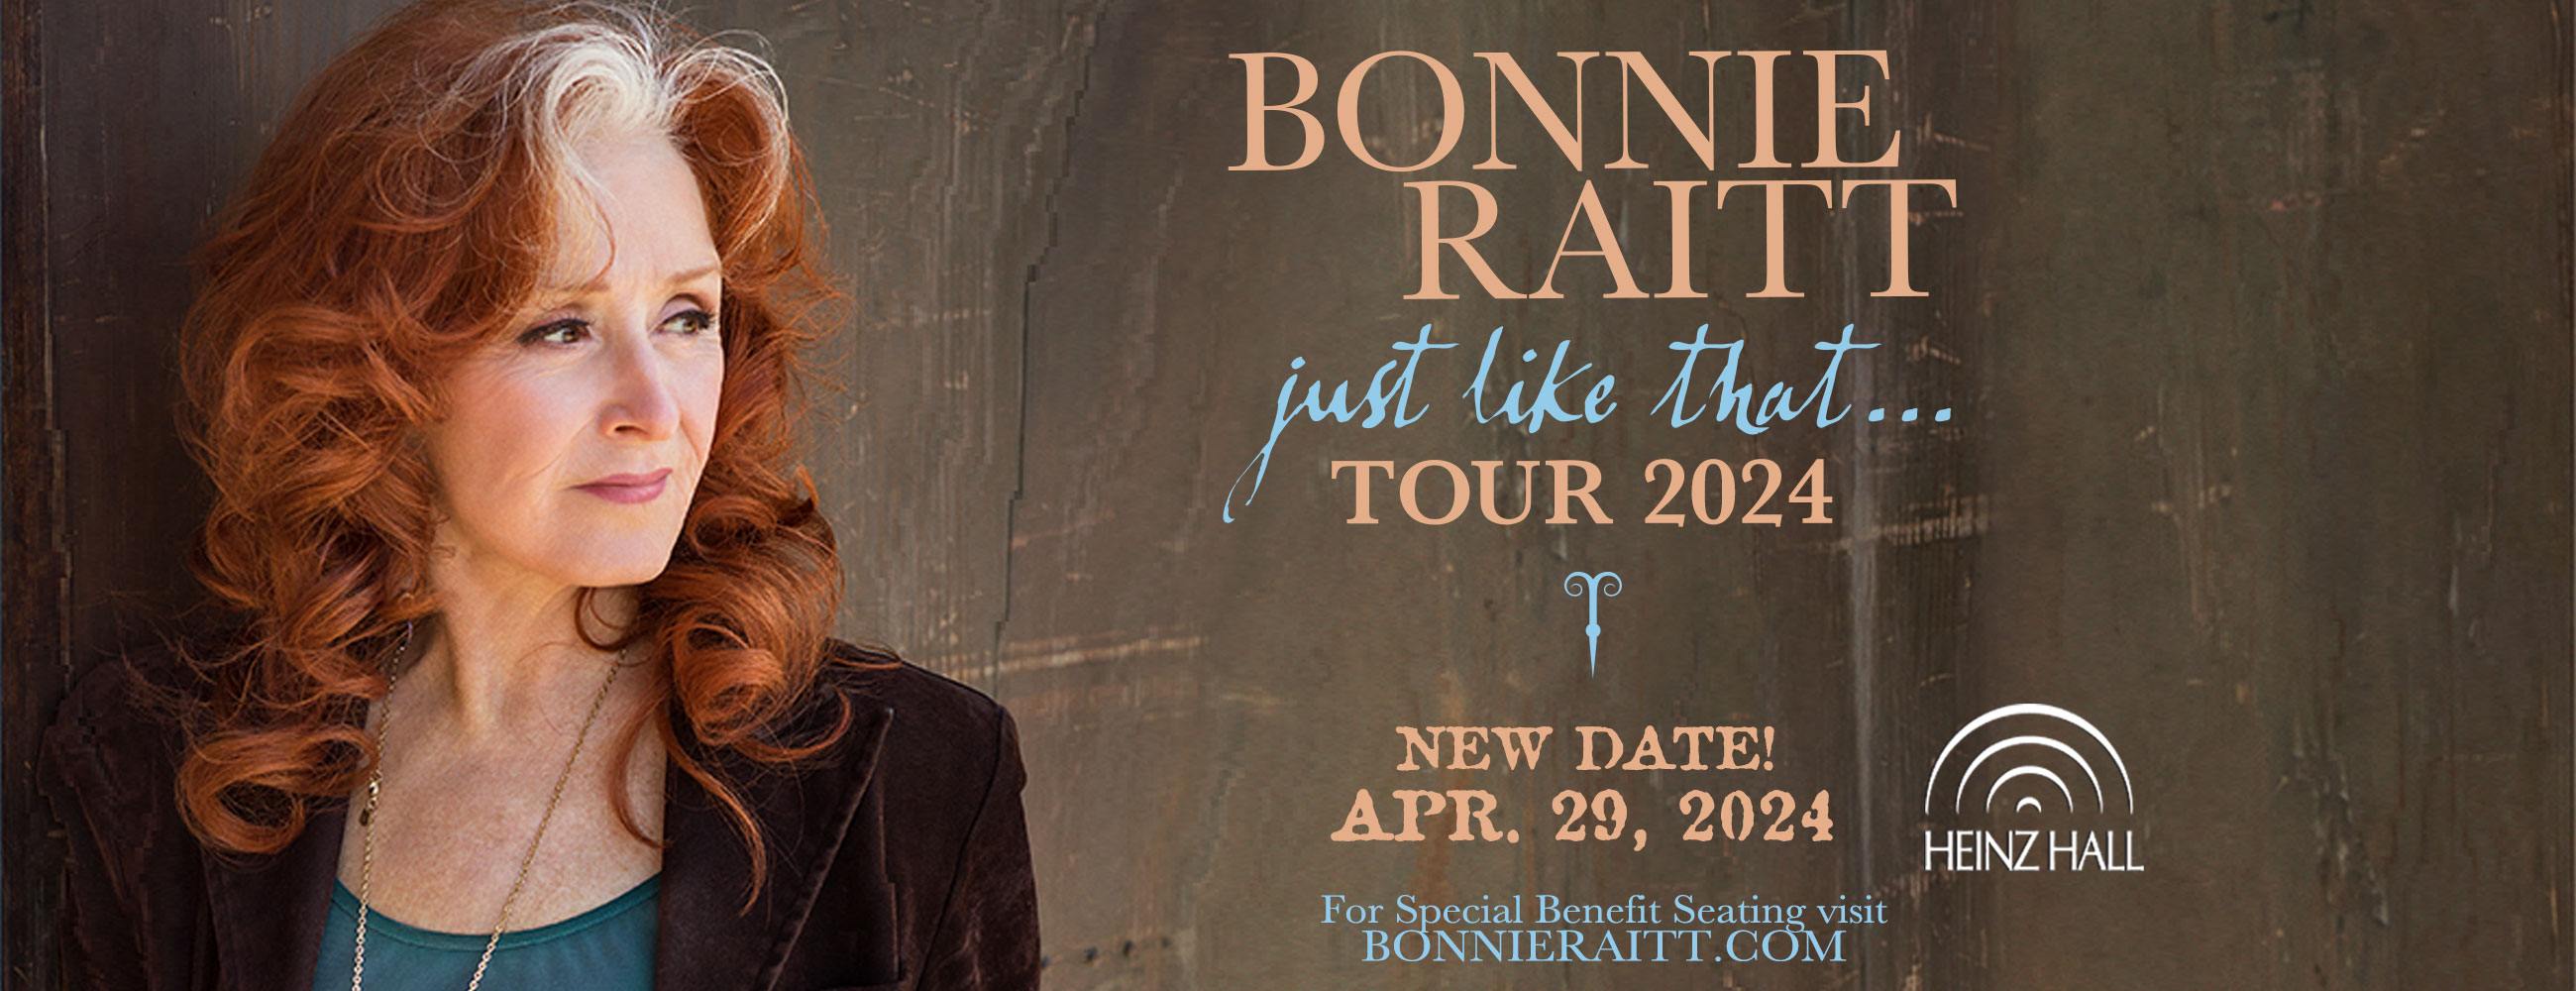 NEW DATE Bonnie Raitt Pittsburgh Official Ticket Source Heinz